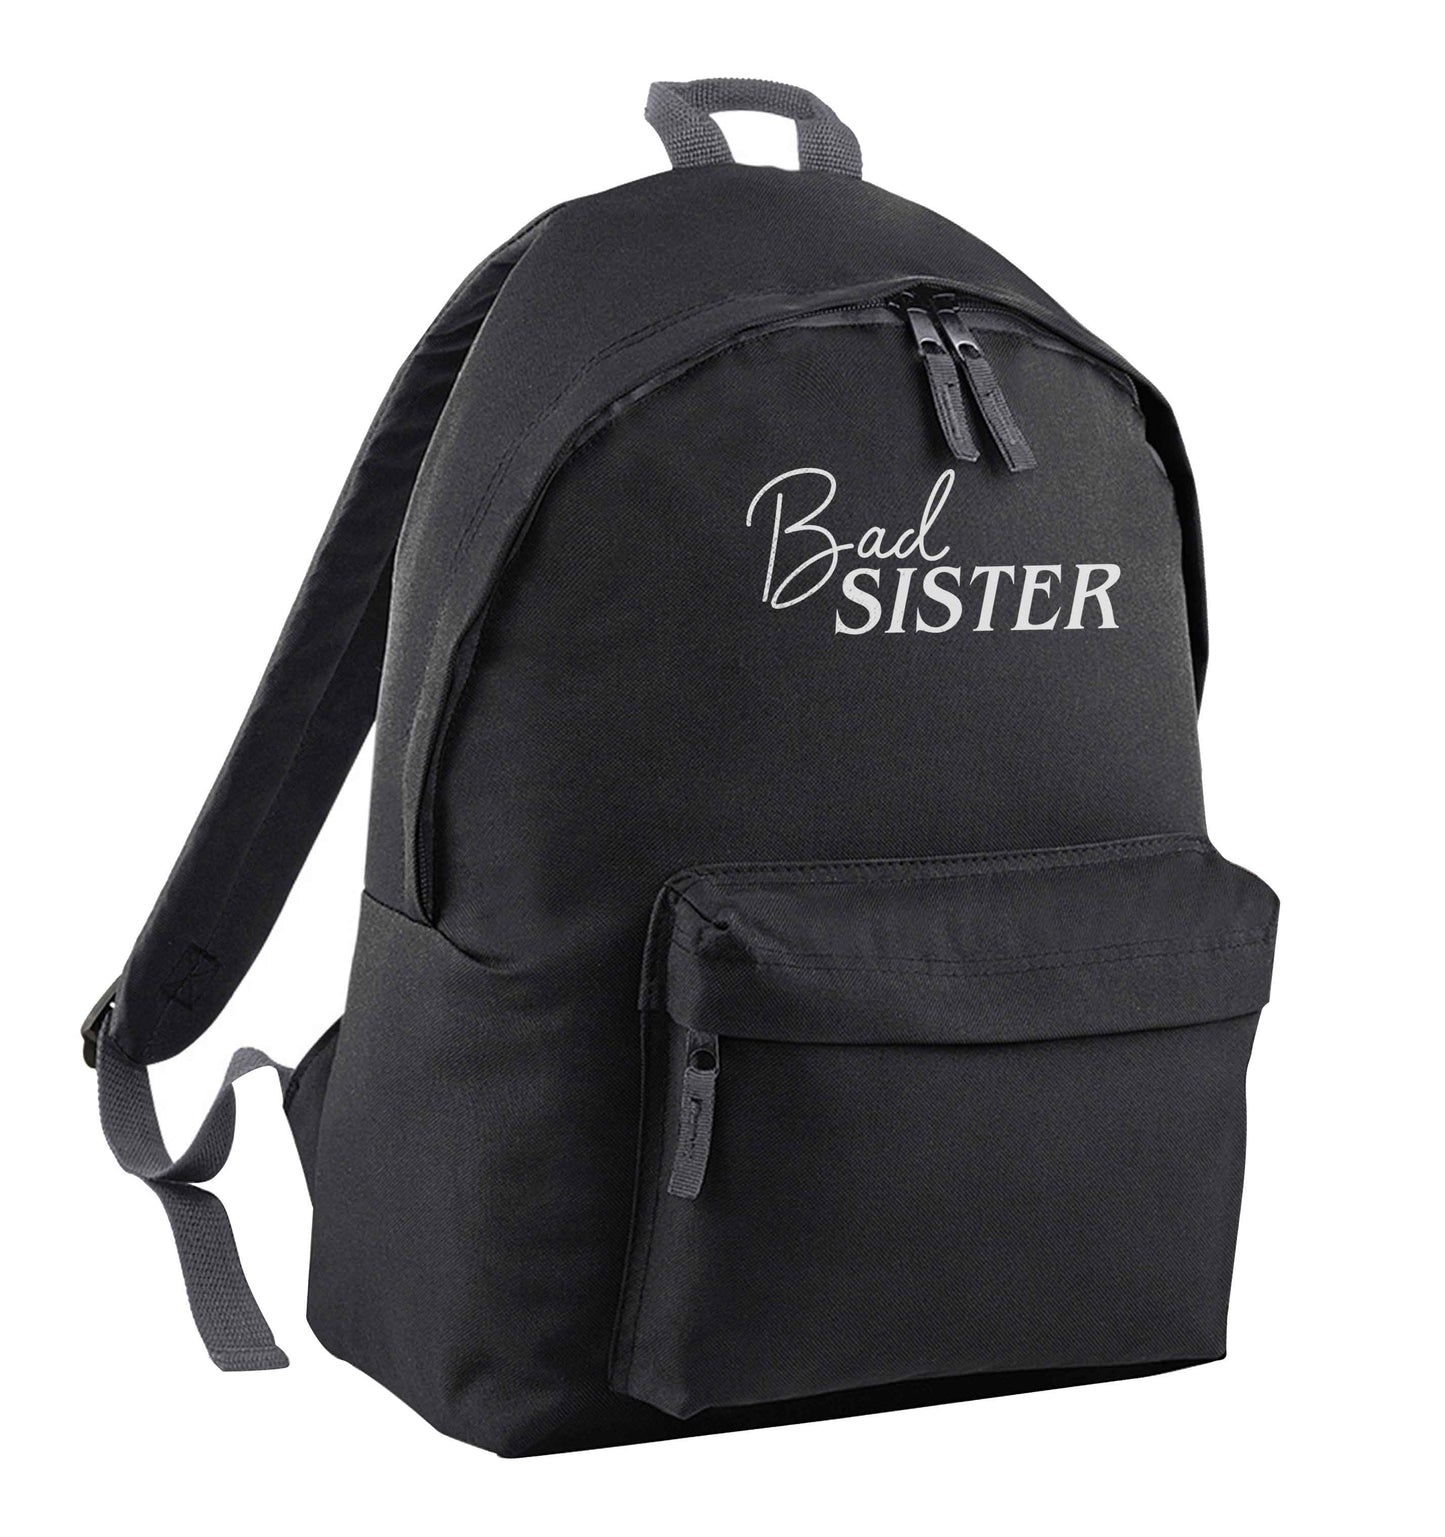 Bad sister black adults backpack